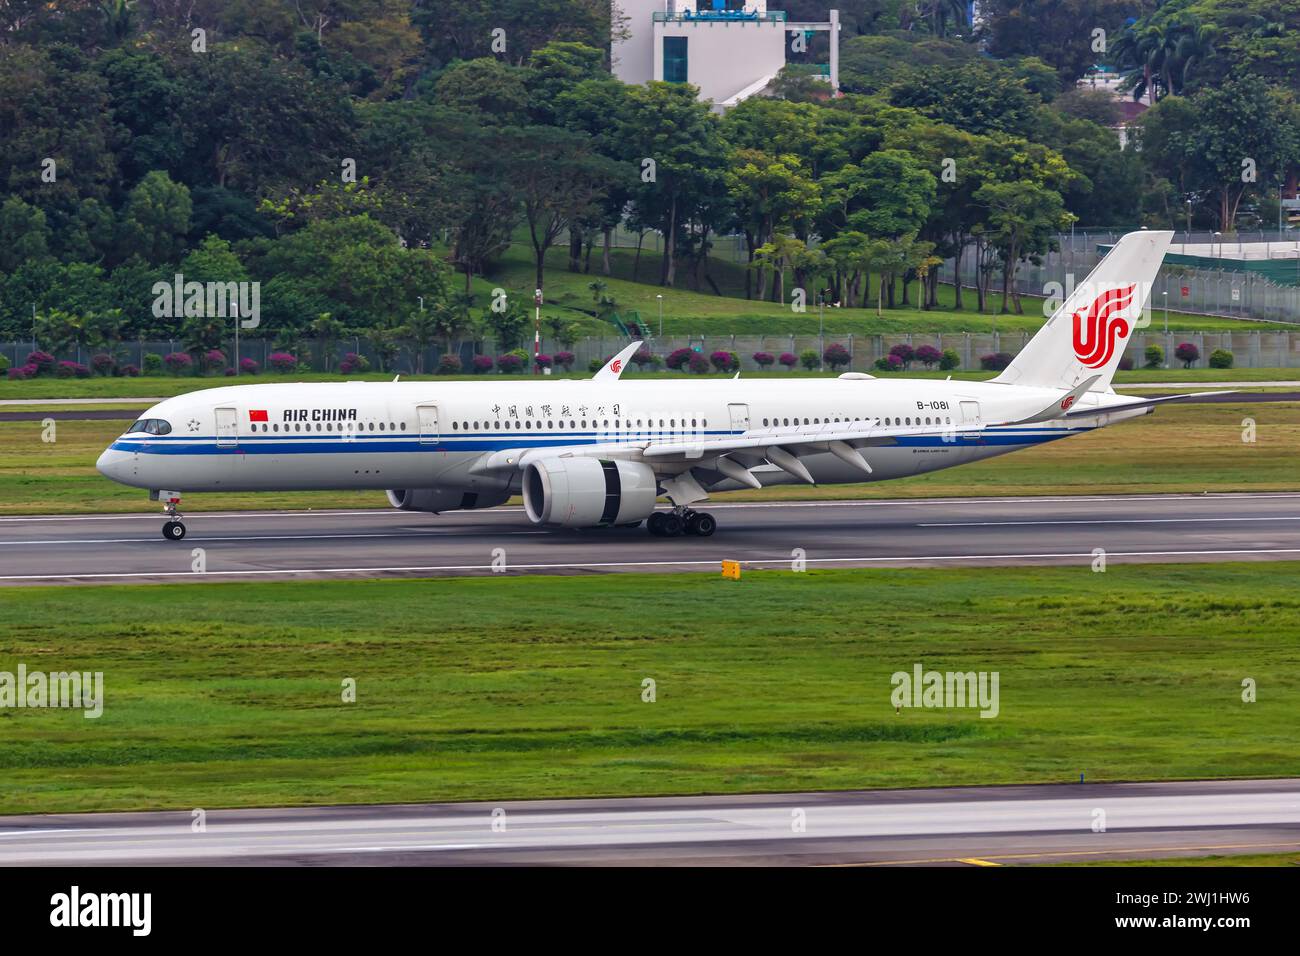 Air China Airbus A350-900 aircraft Changi Airport in Singapore Stock Photo